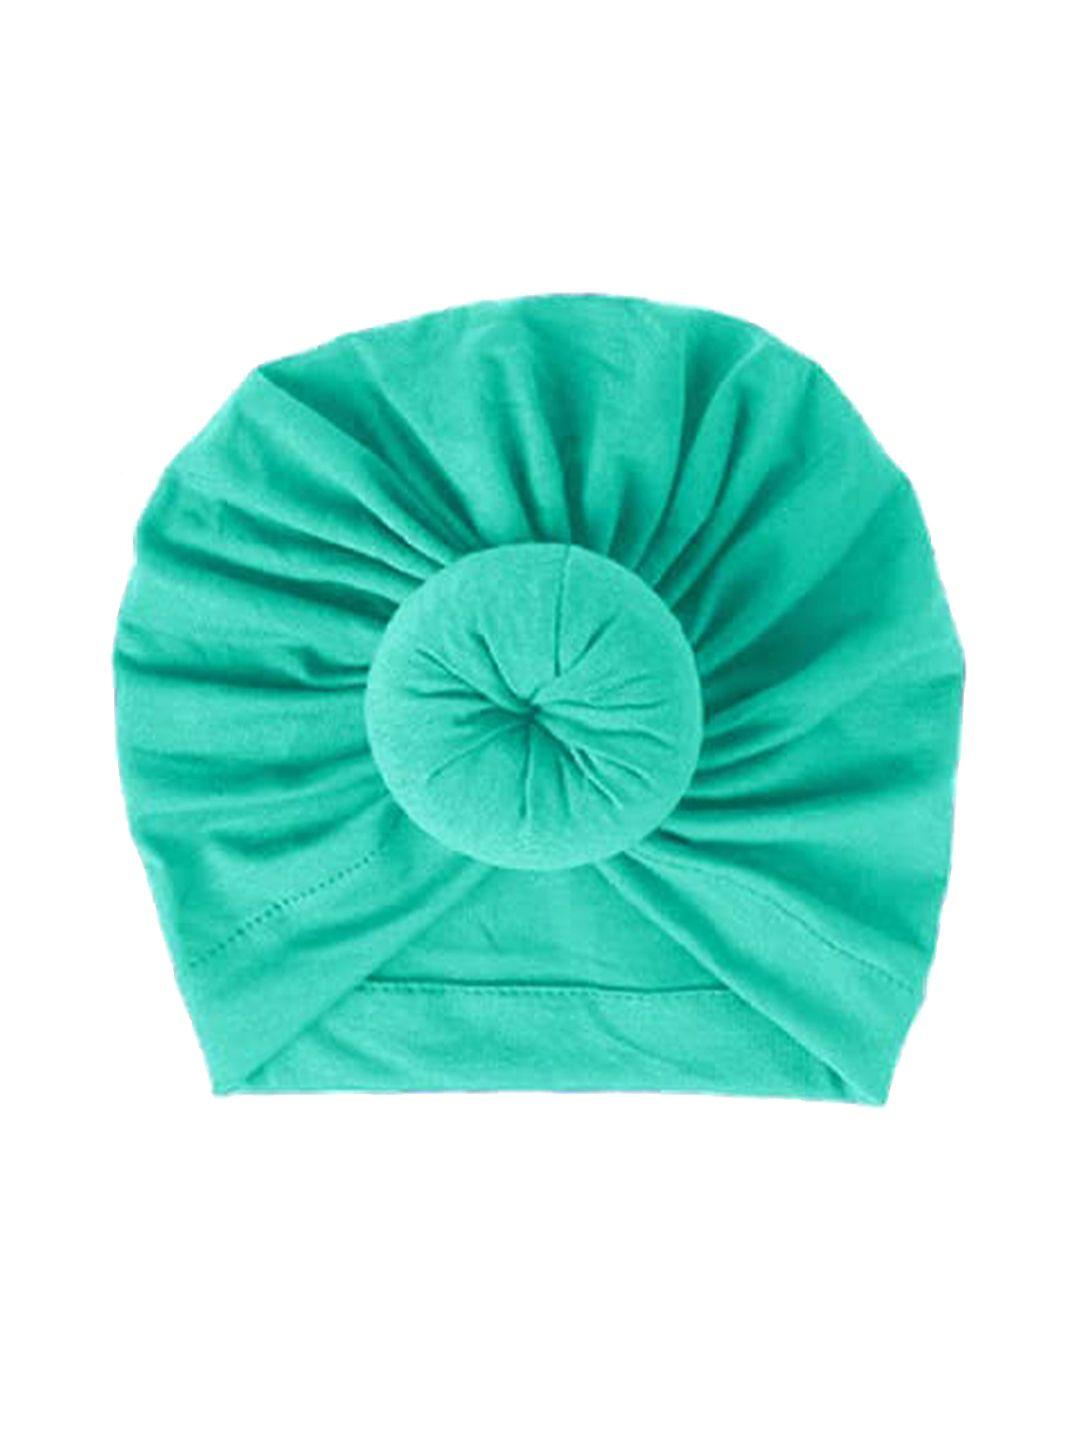 syga infants cotton turban cap